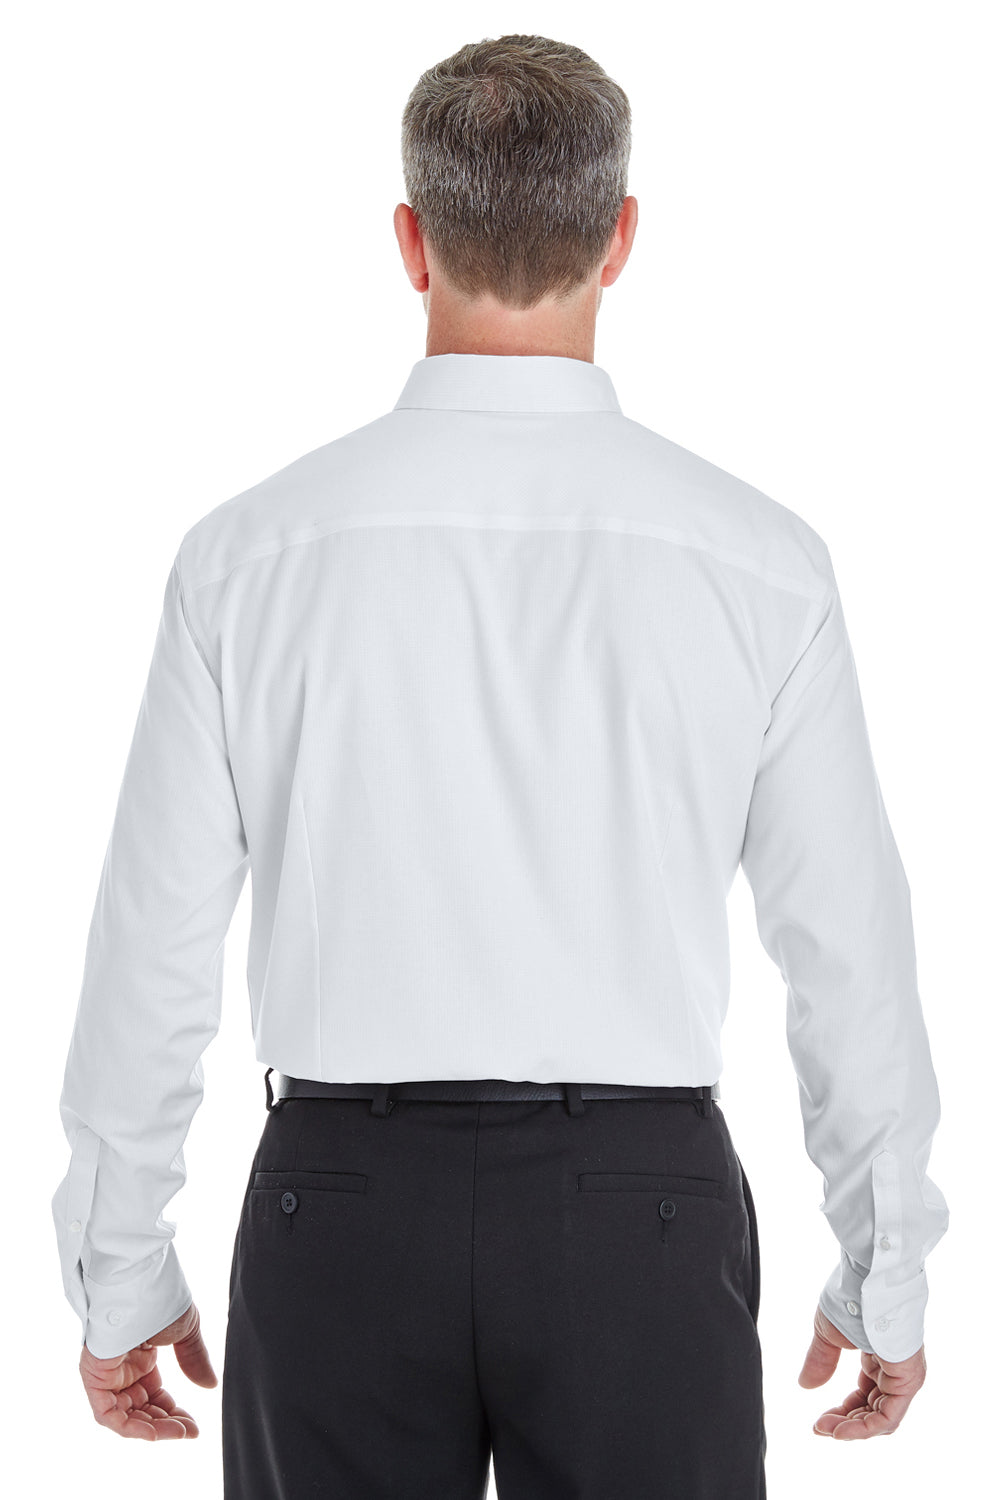 Devon & Jones DG532 Mens Crown Woven Collection Wrinkle Resistant Long Sleeve Button Down Shirt White Back